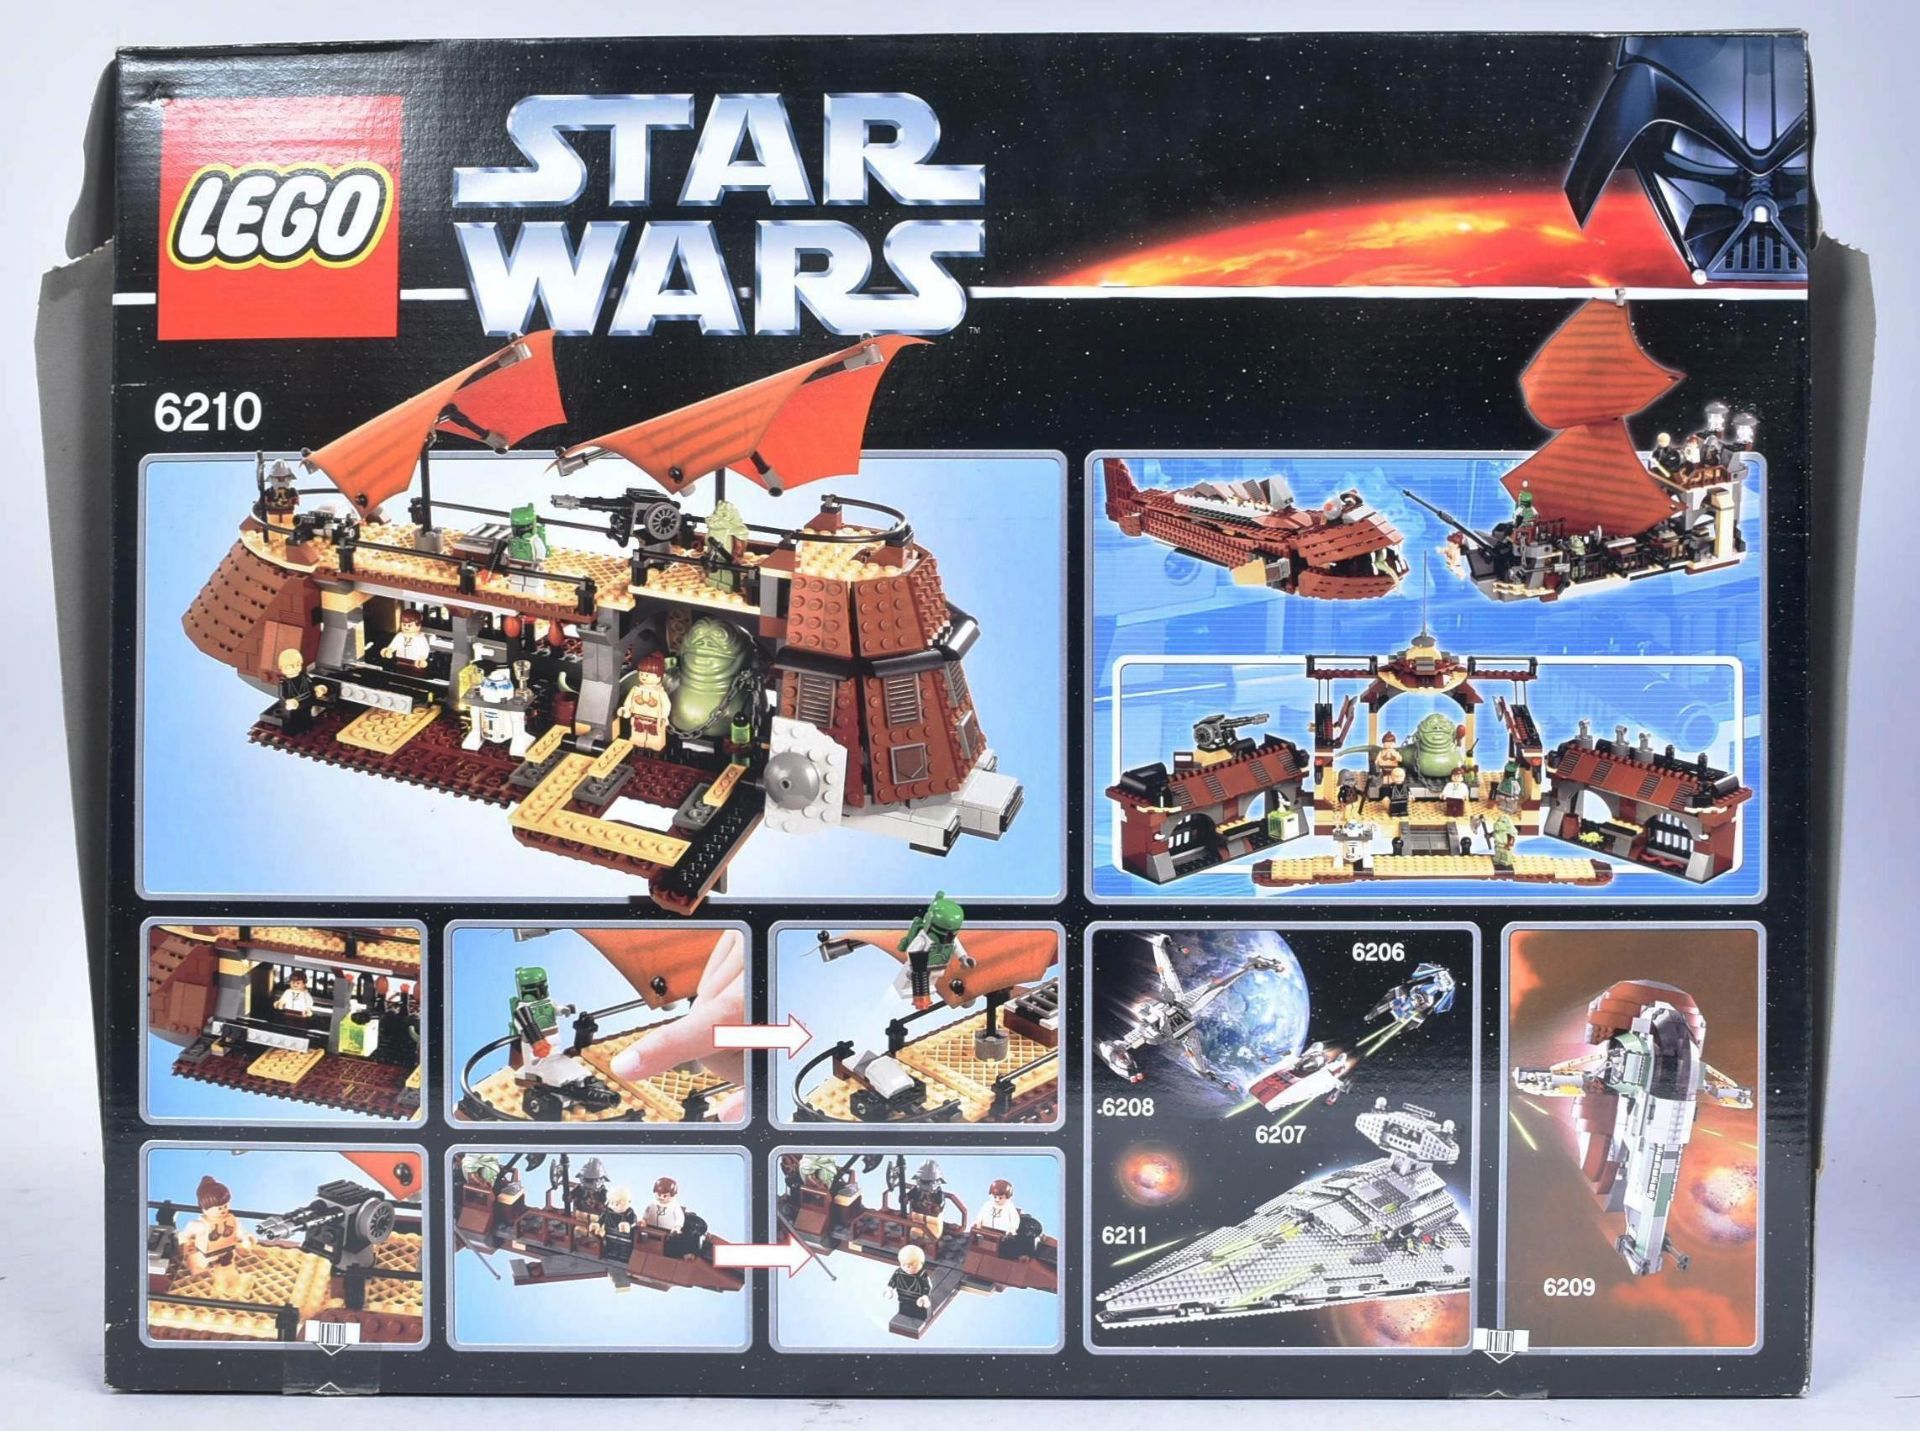 LEGO - STAR WARS - 6210 - JABBAS SAIL BARGE - Image 2 of 6